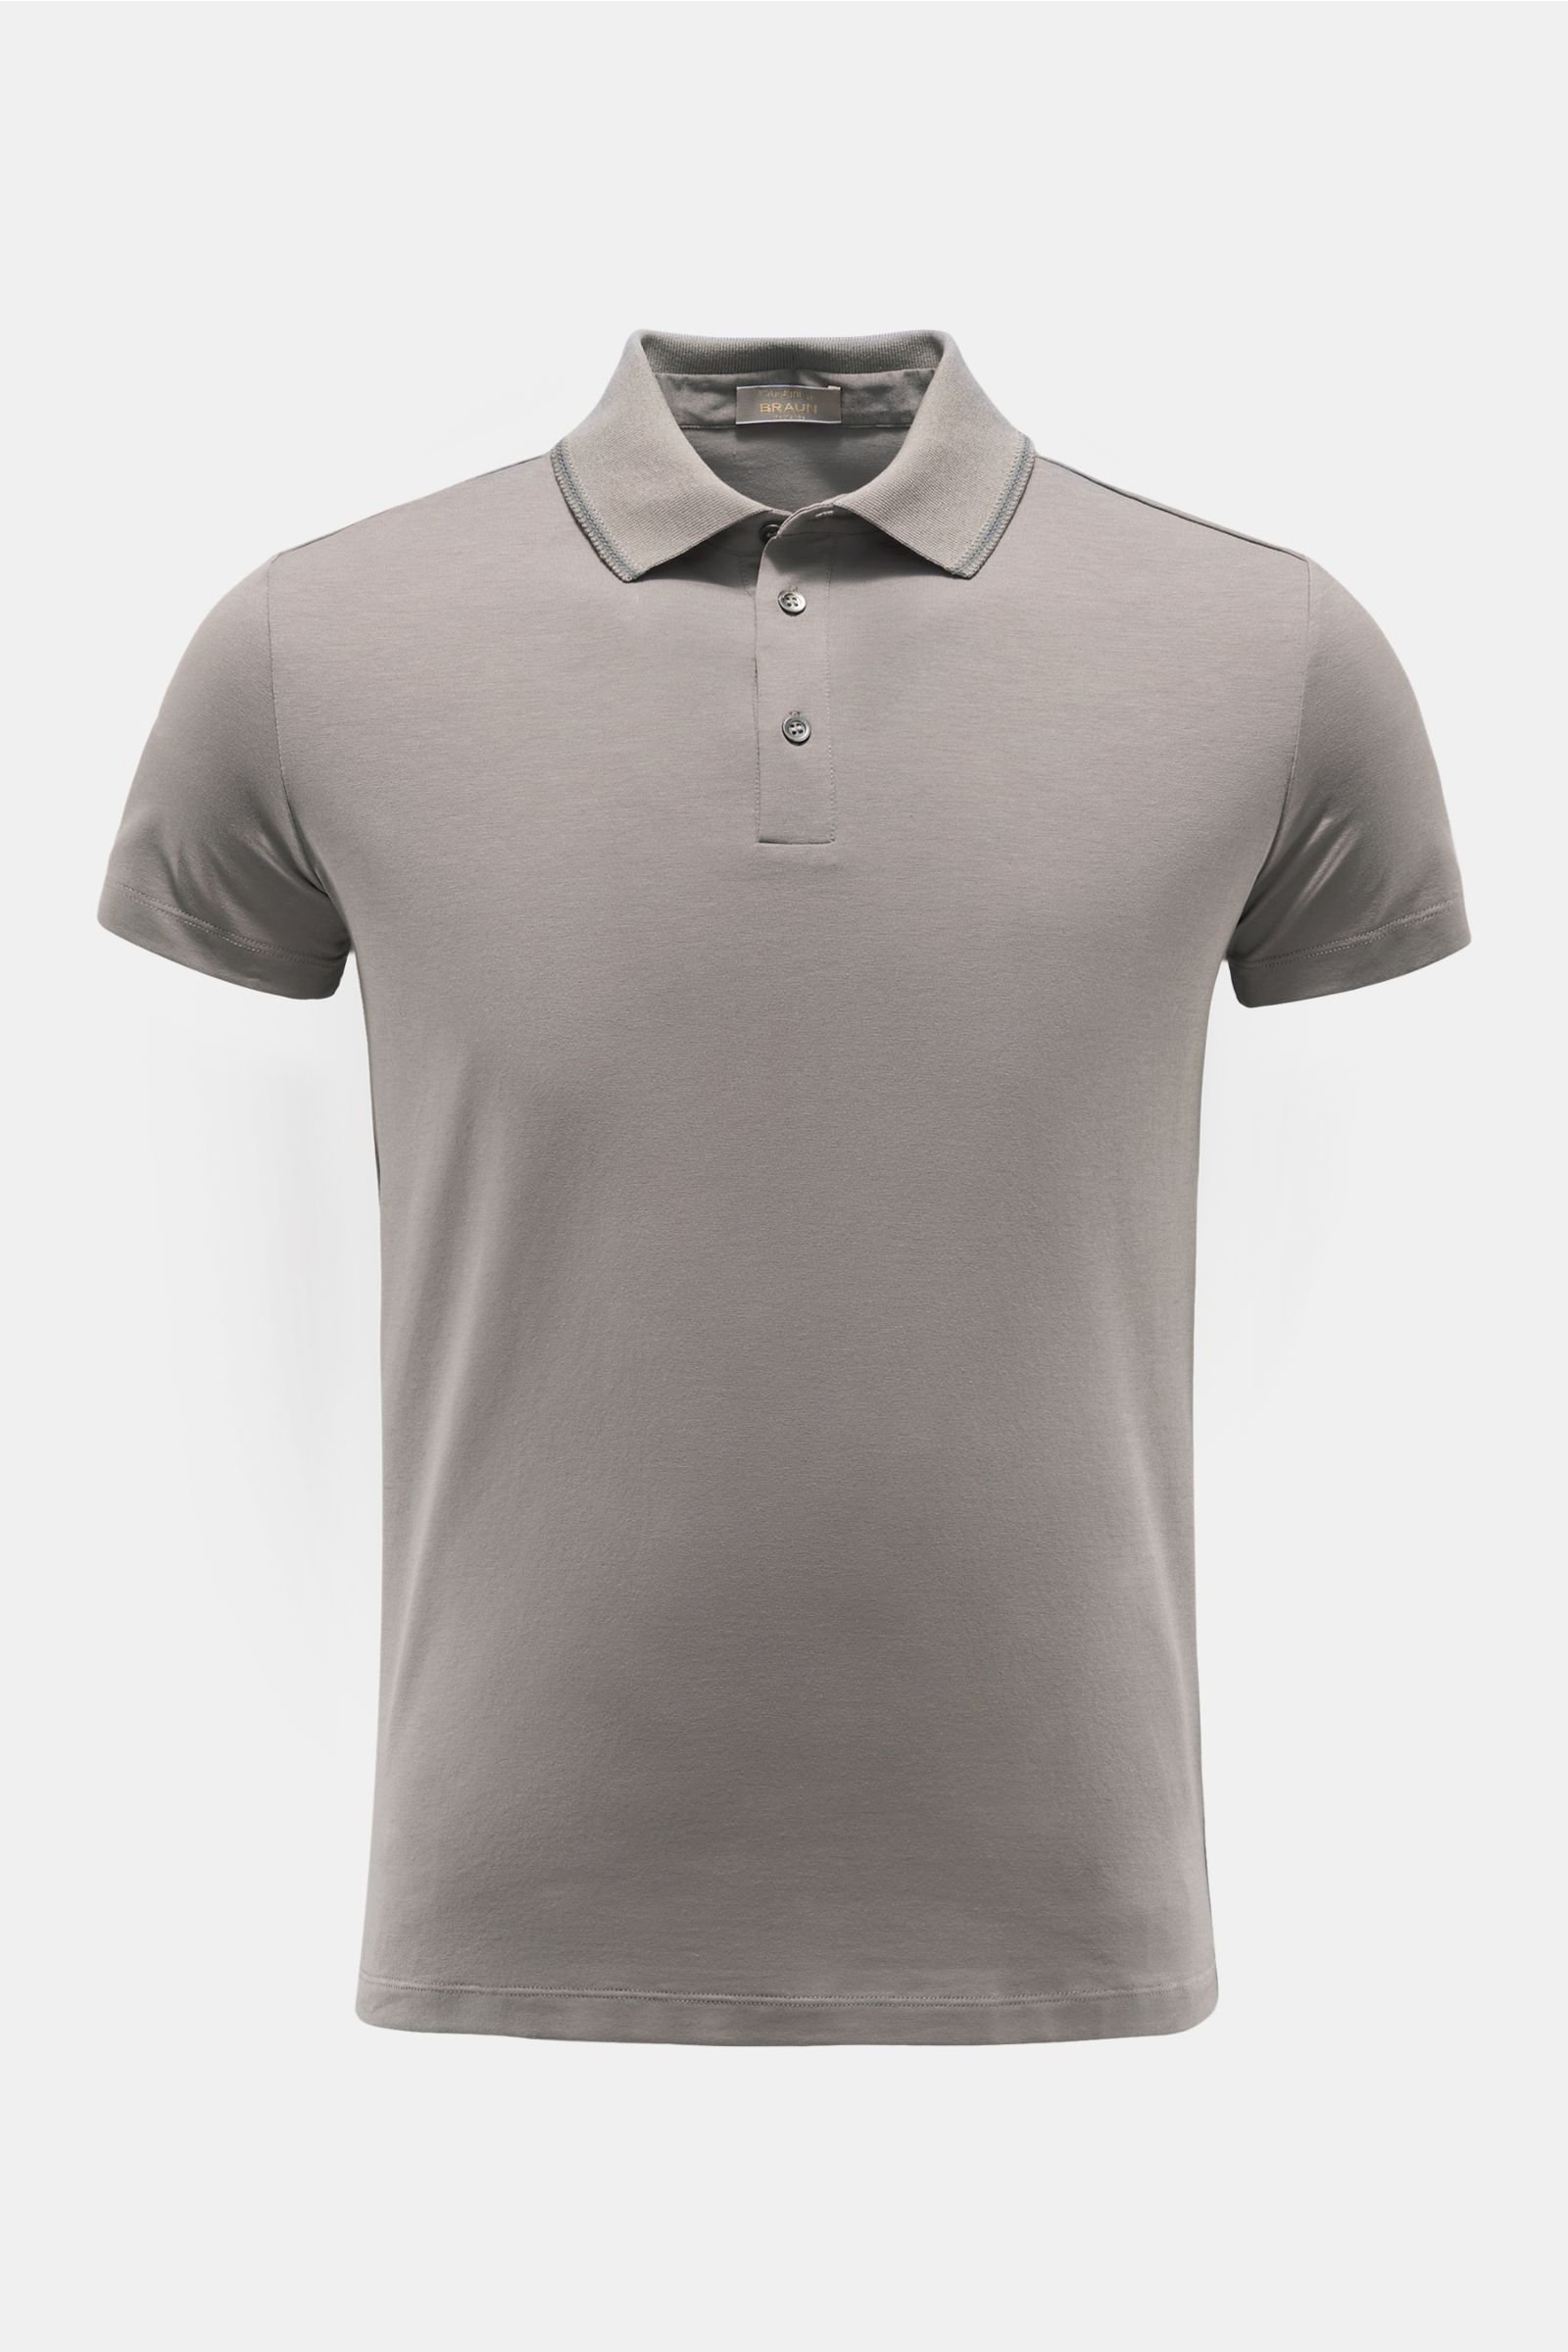 Jersey polo shirt grey-brown